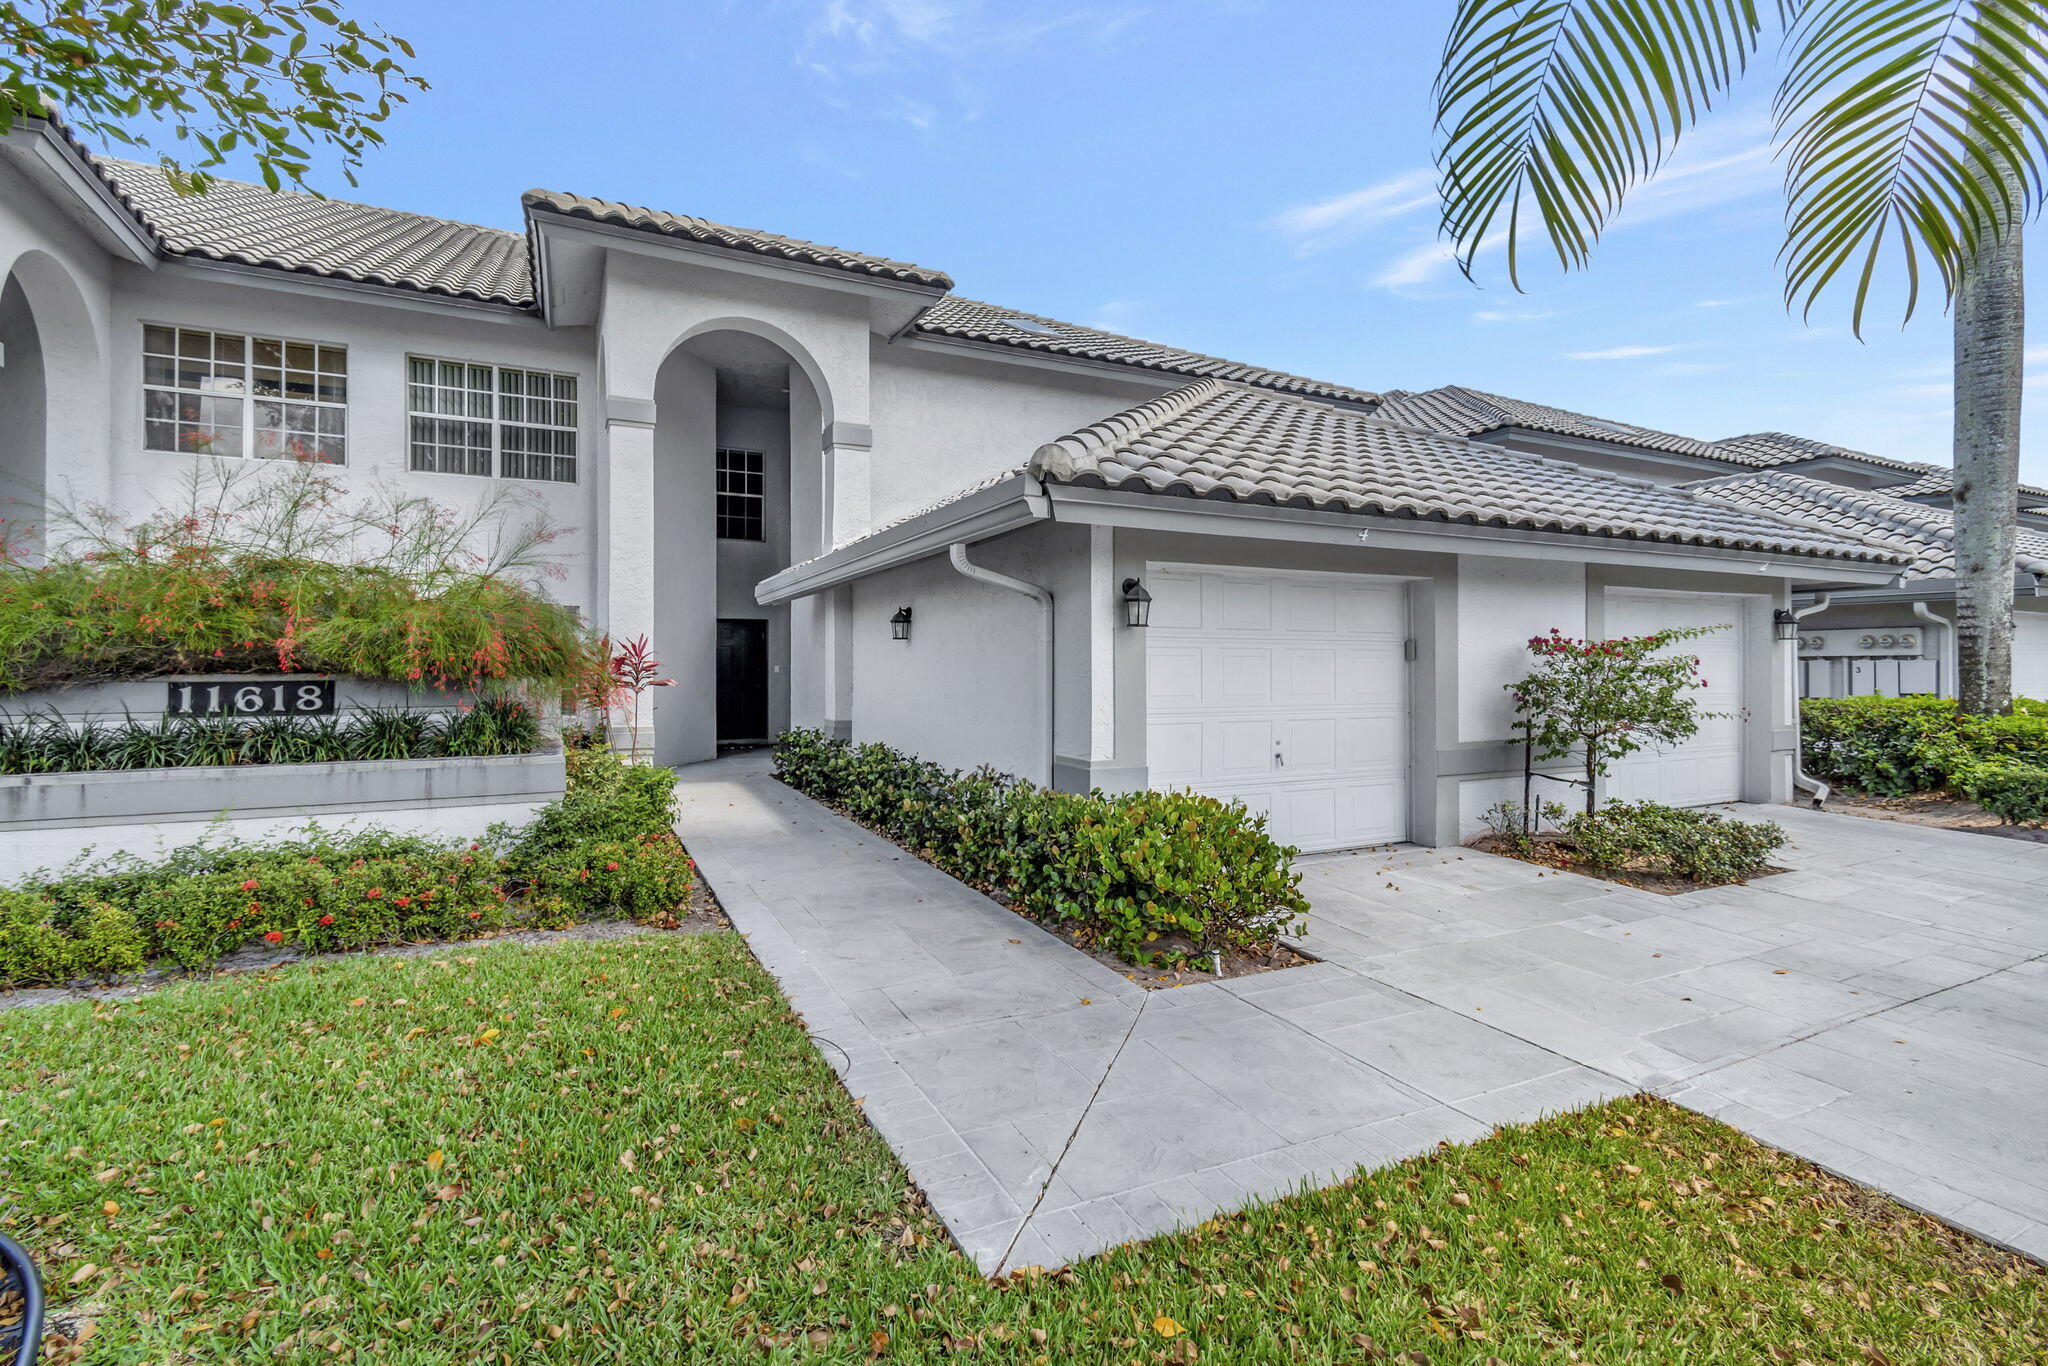 Property for Sale at 11618 Briarwood Circle 2, Boynton Beach, Palm Beach County, Florida - Bedrooms: 2 
Bathrooms: 2  - $455,000